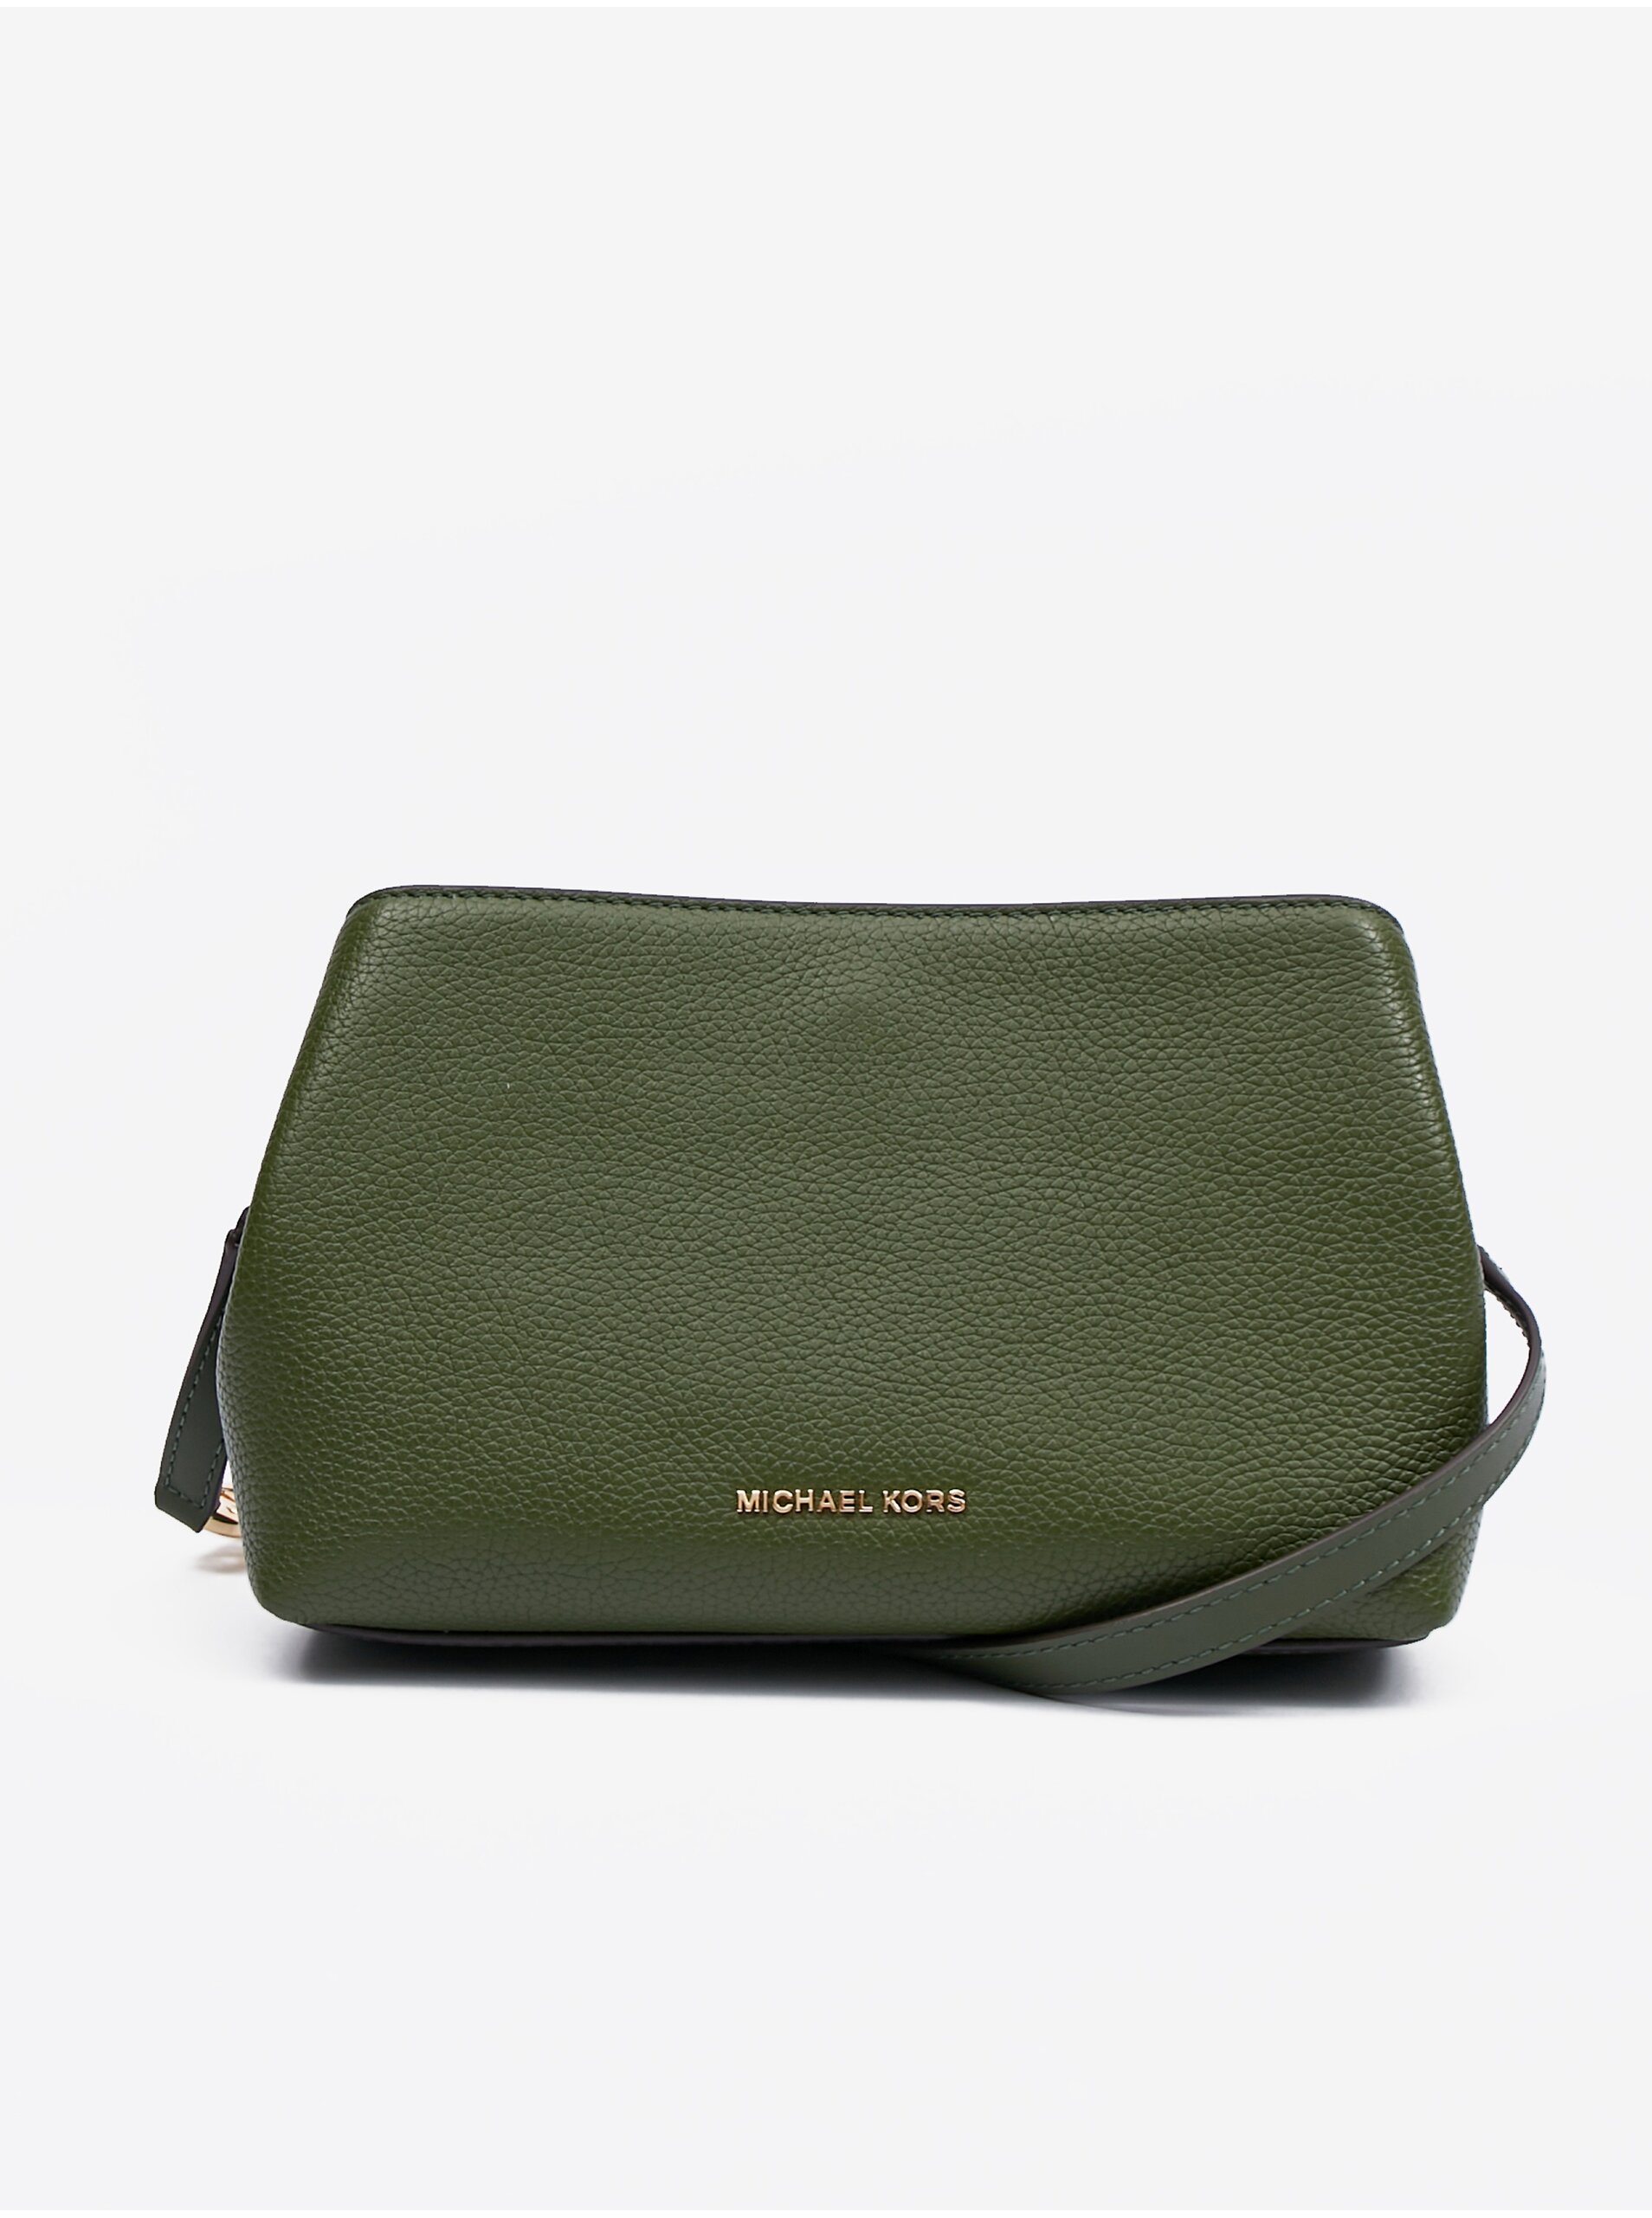 Green Women's Leather Crossbody Handbag Michael Kors - Women